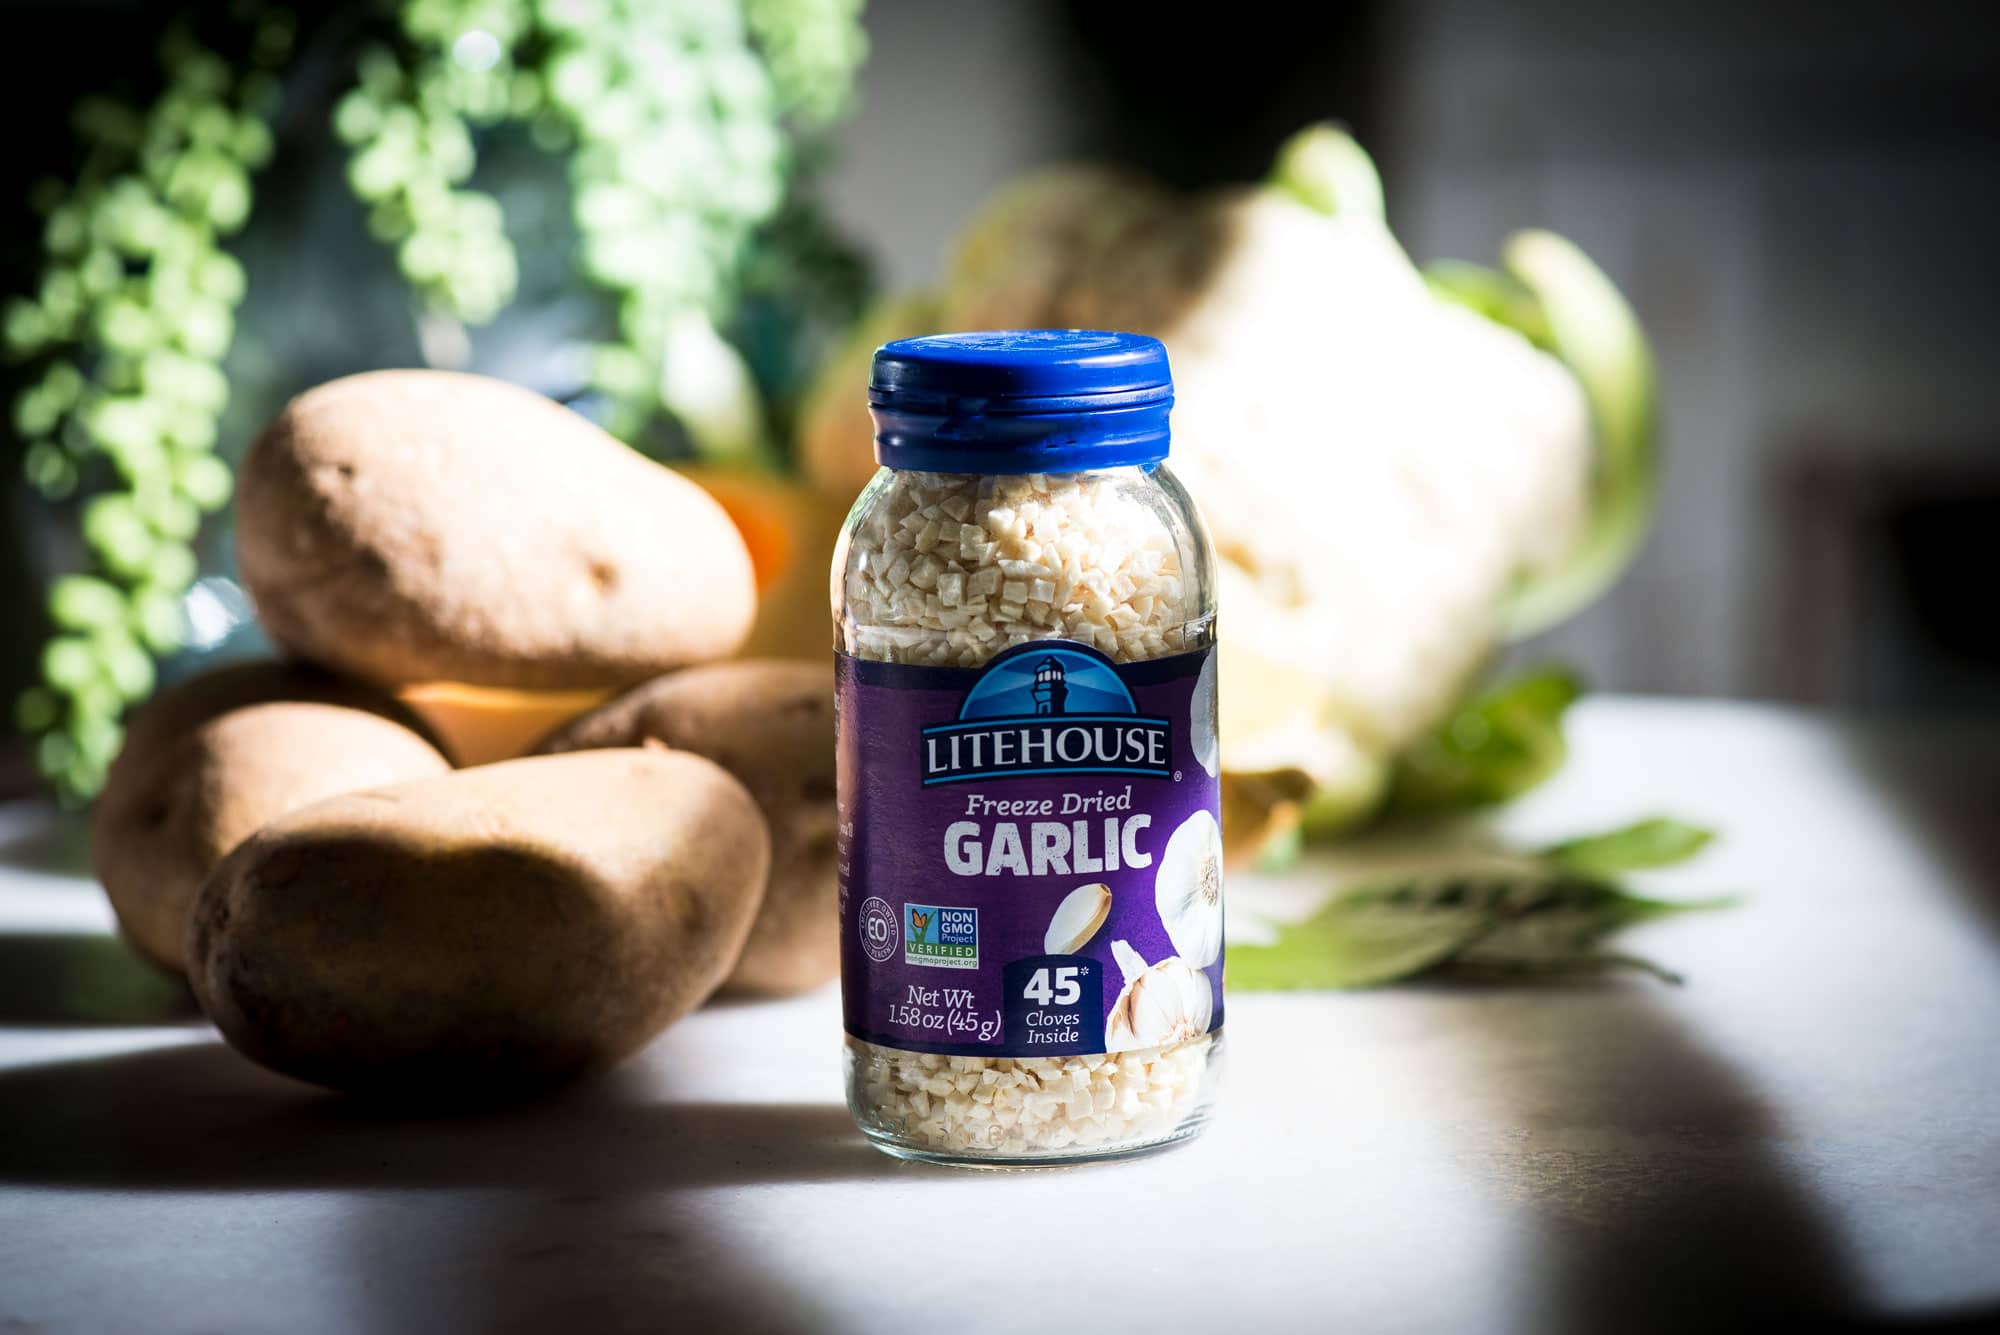 Litehouse Freeze Dried Garlic jar with Idaho Potatoes